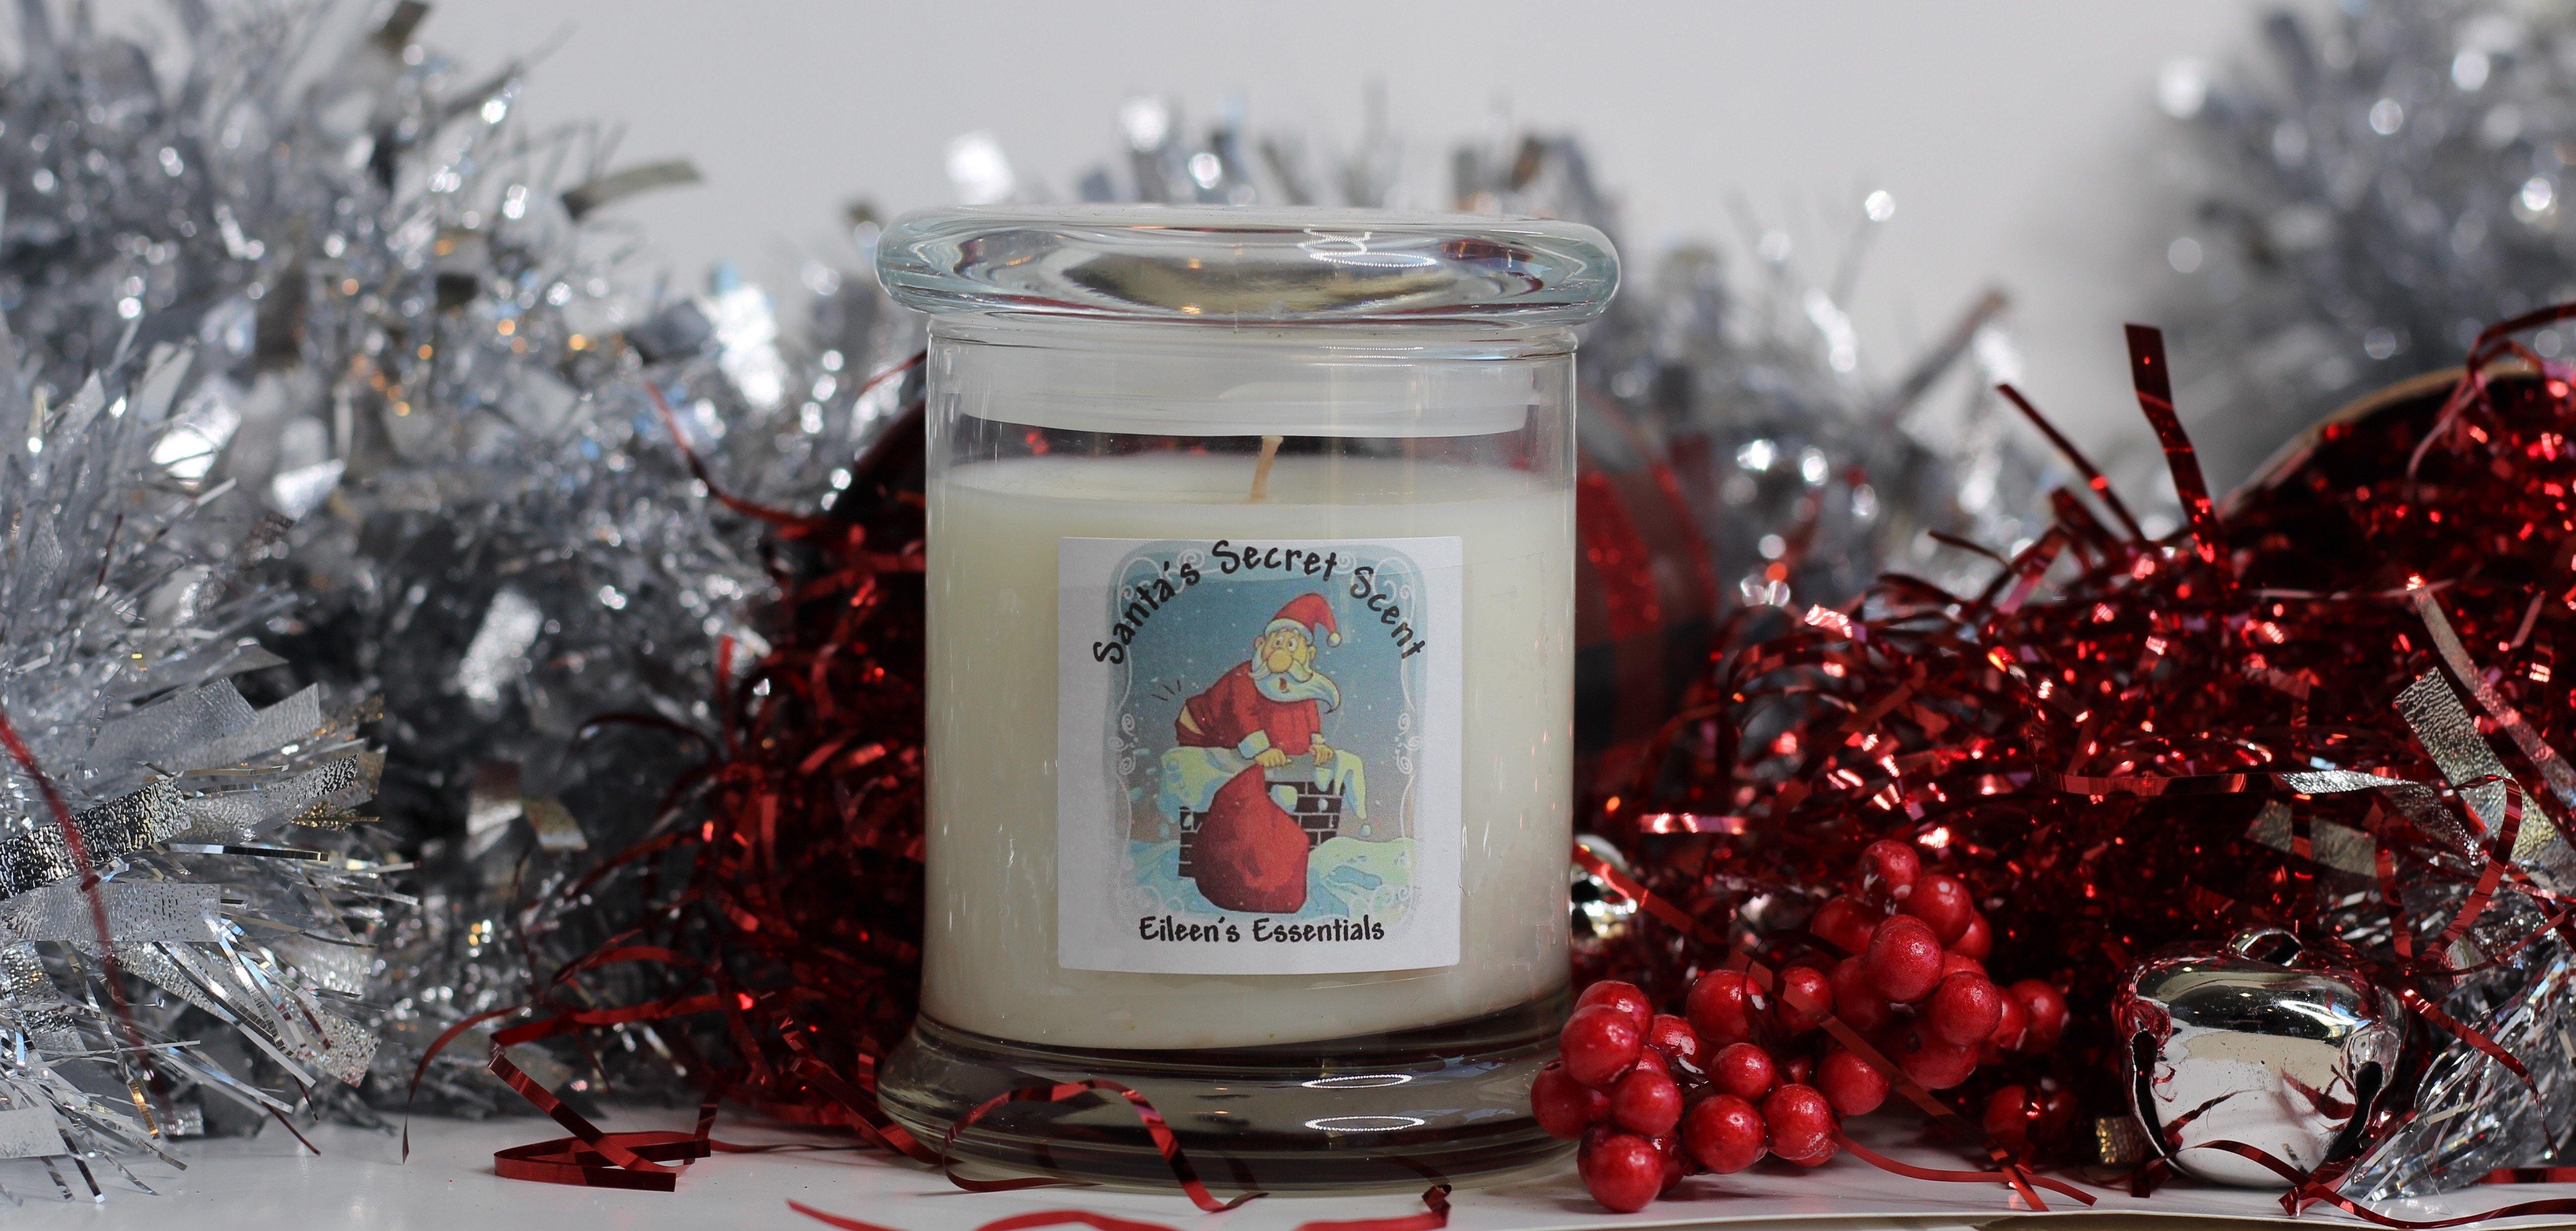 Holiday Candle; Santa's Secret - Eileen's Essentials